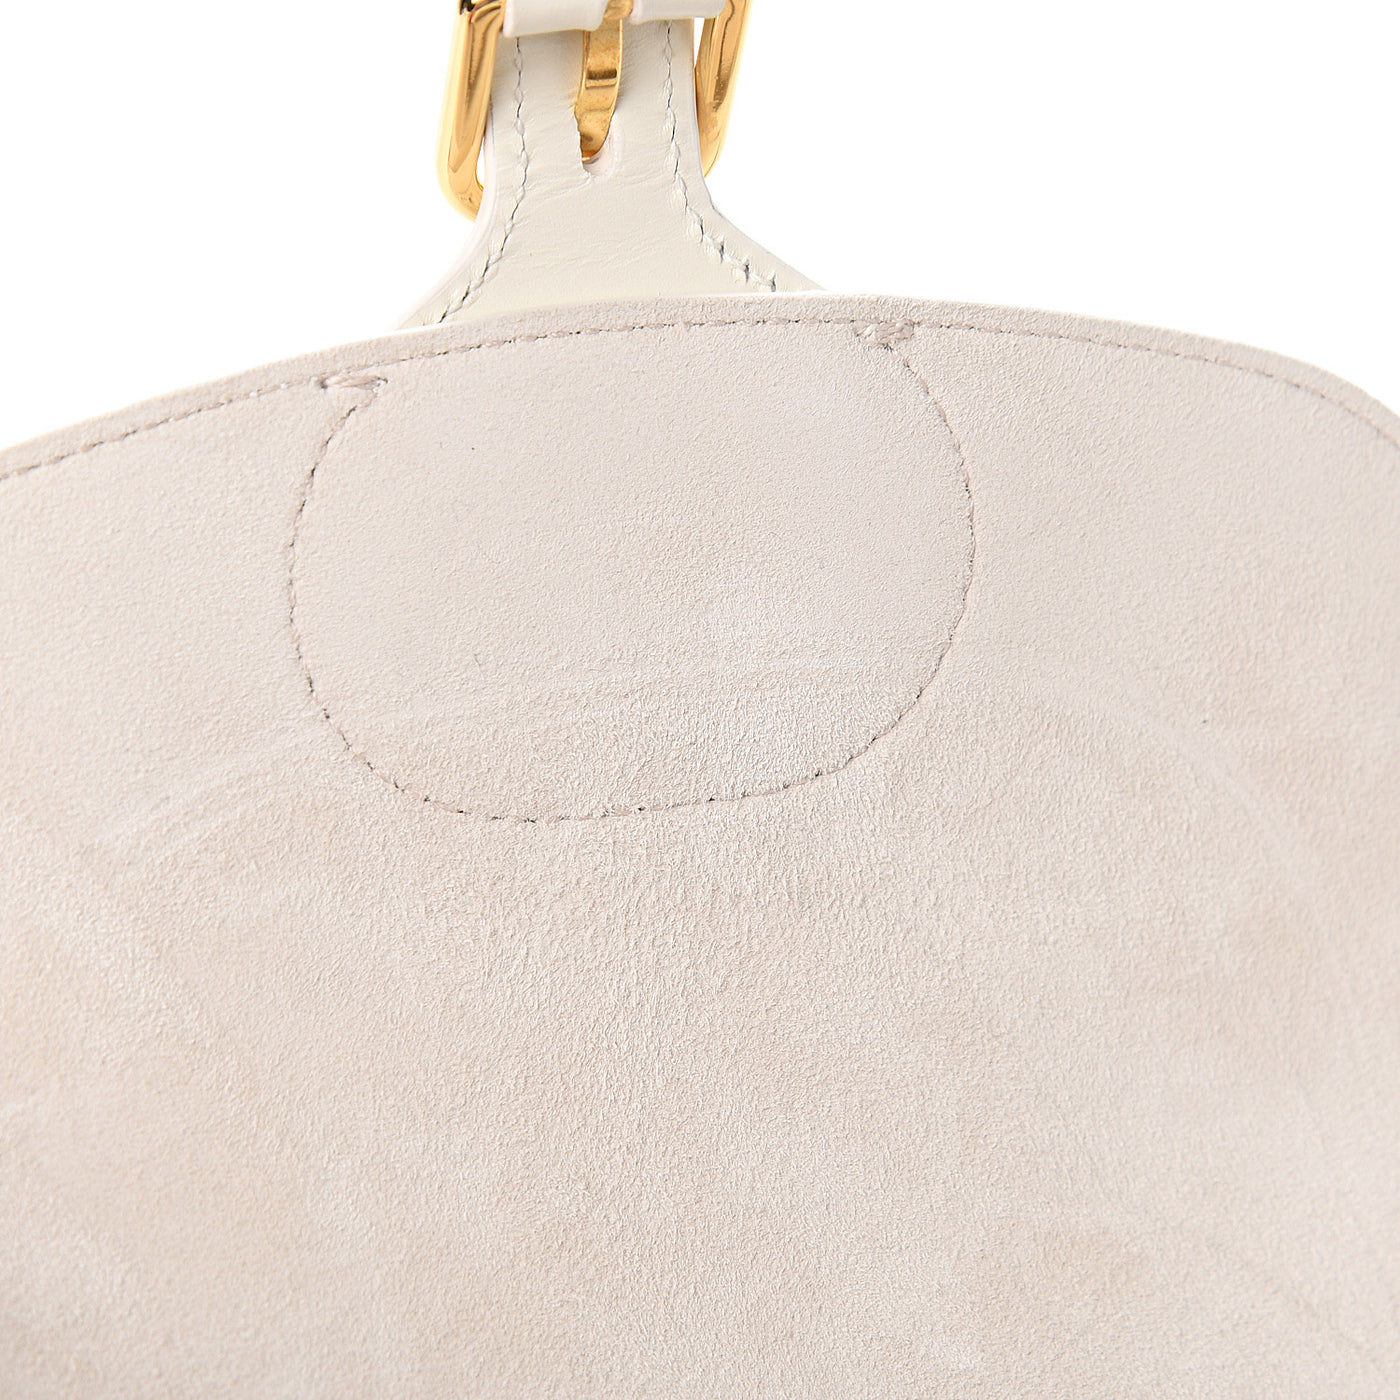 Christian Dior medium Bobby bag As new RRP £2800